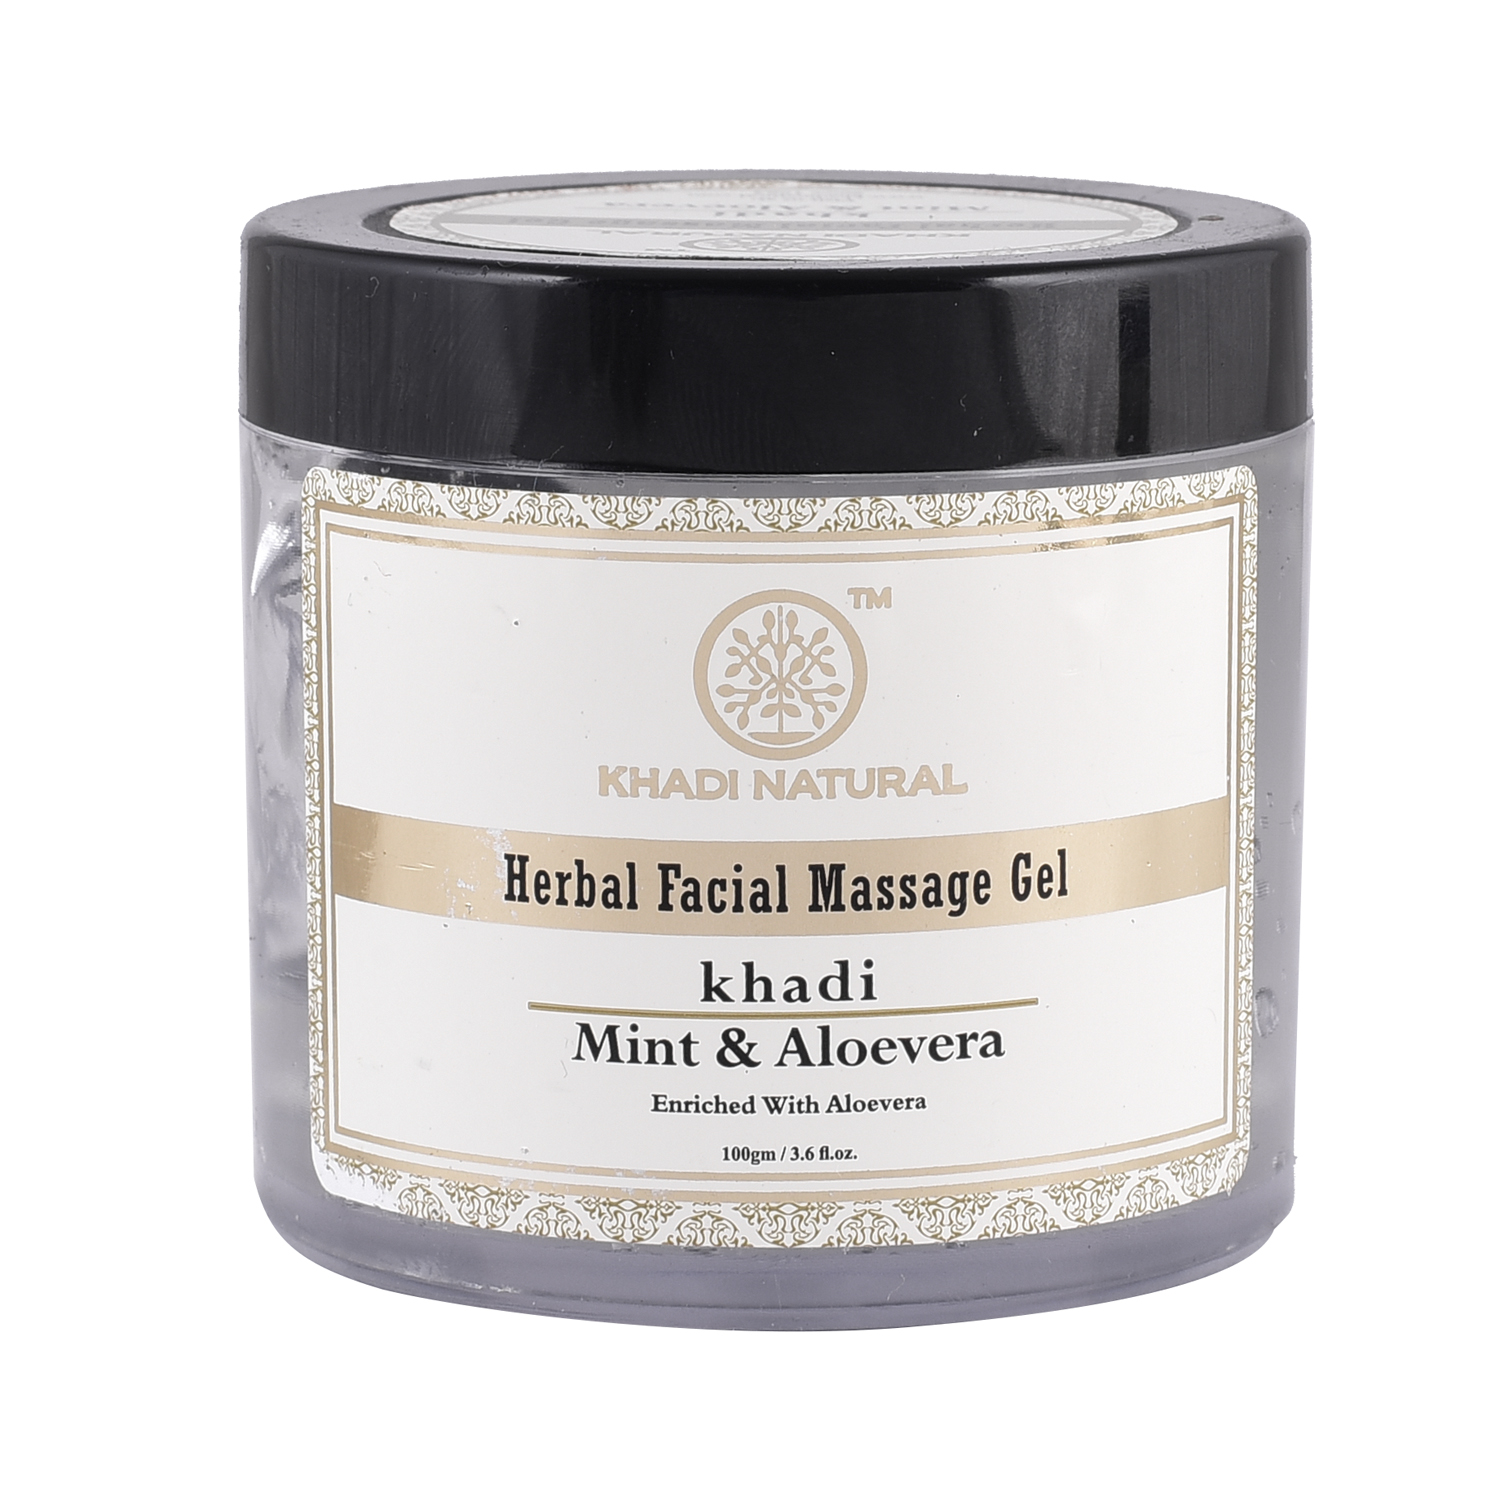 Herbal Facial Massage Gel Khadi MINT& ALOEVERA, Khadi Natural (Массажный гель для лица МЯТА И АЛОЭ ВЕРА, Кхади Нэчрл), 100 г.